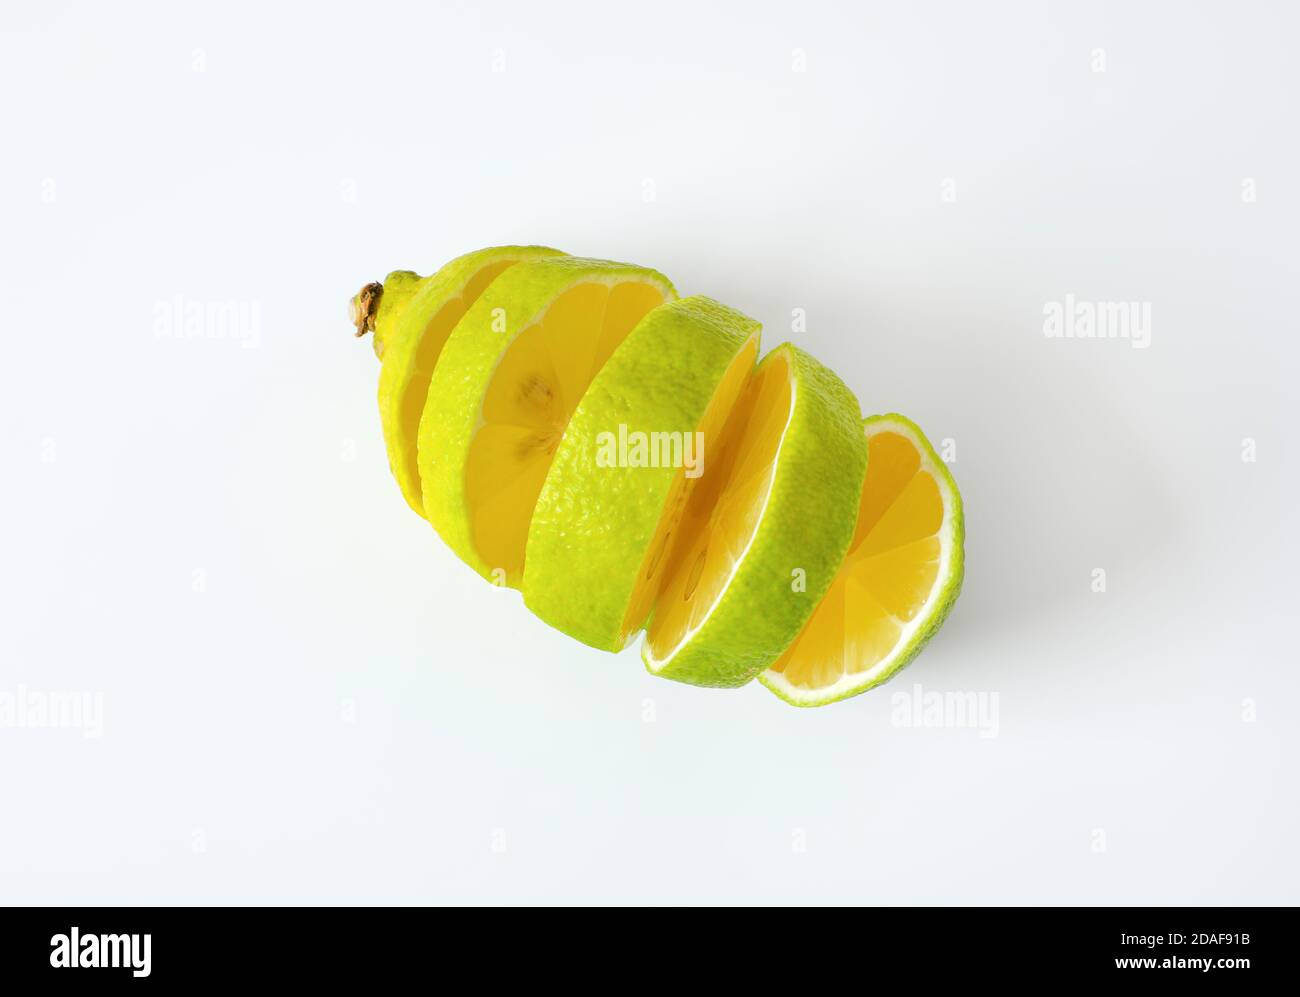 Lemon with green peel and yellow flesh, sliced Stock Photo